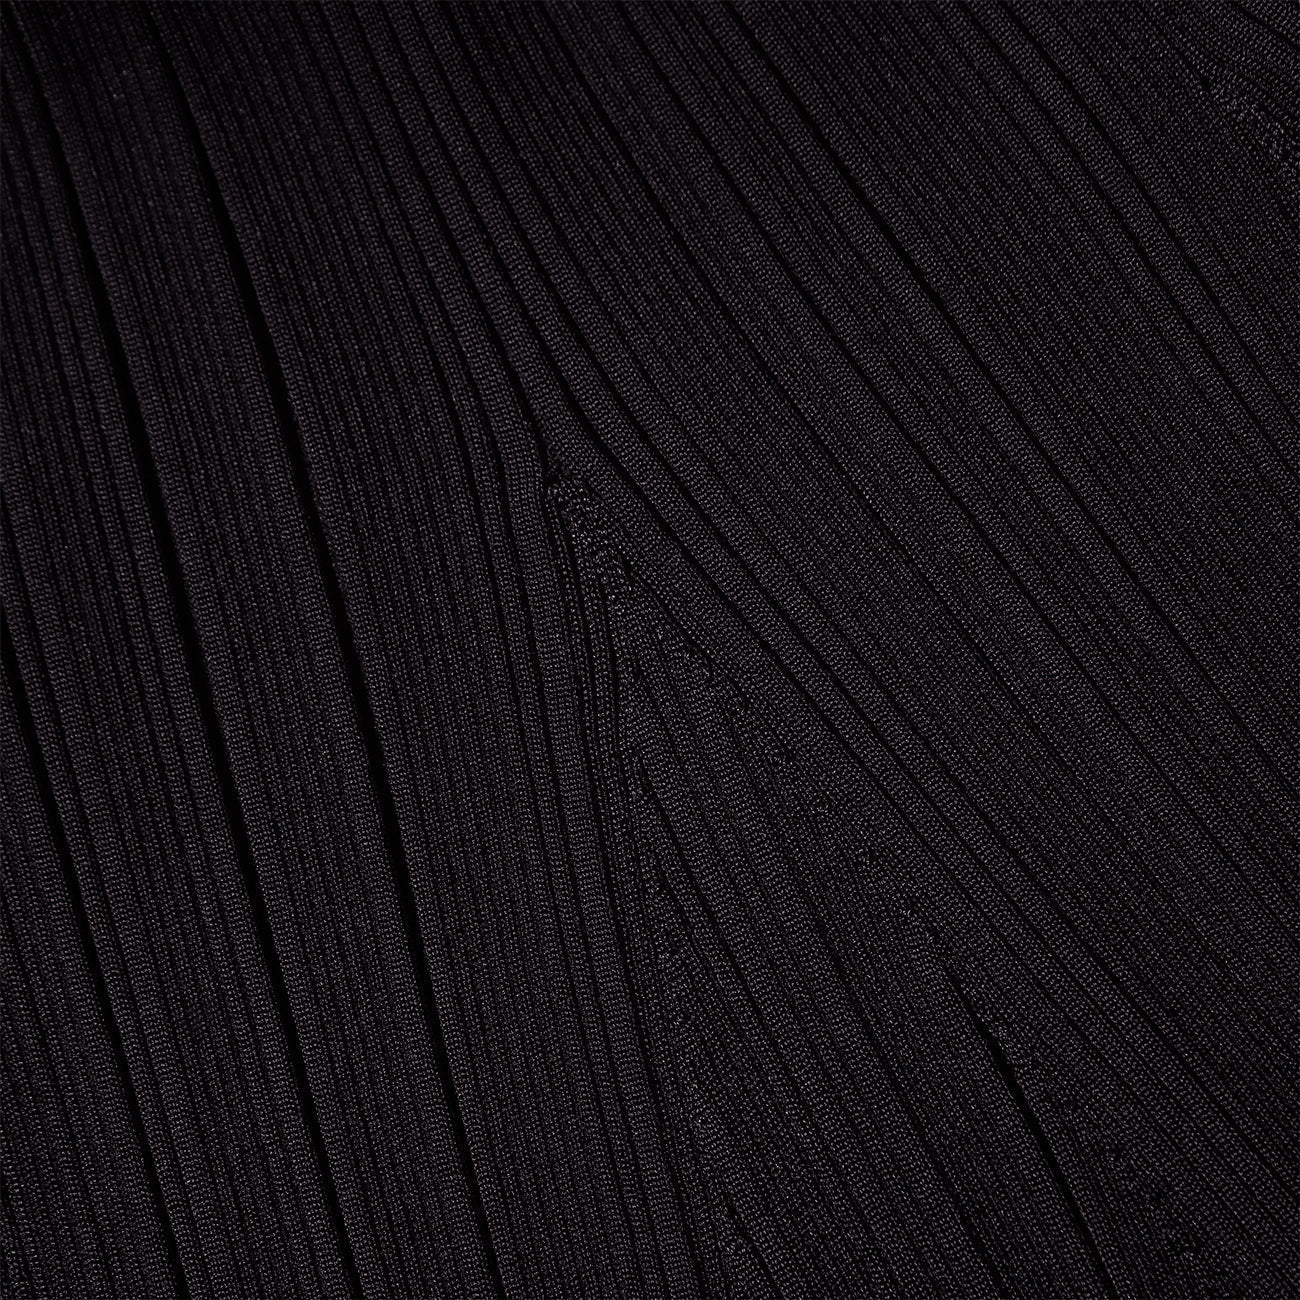 Black Ribbed Knit Midi Dress